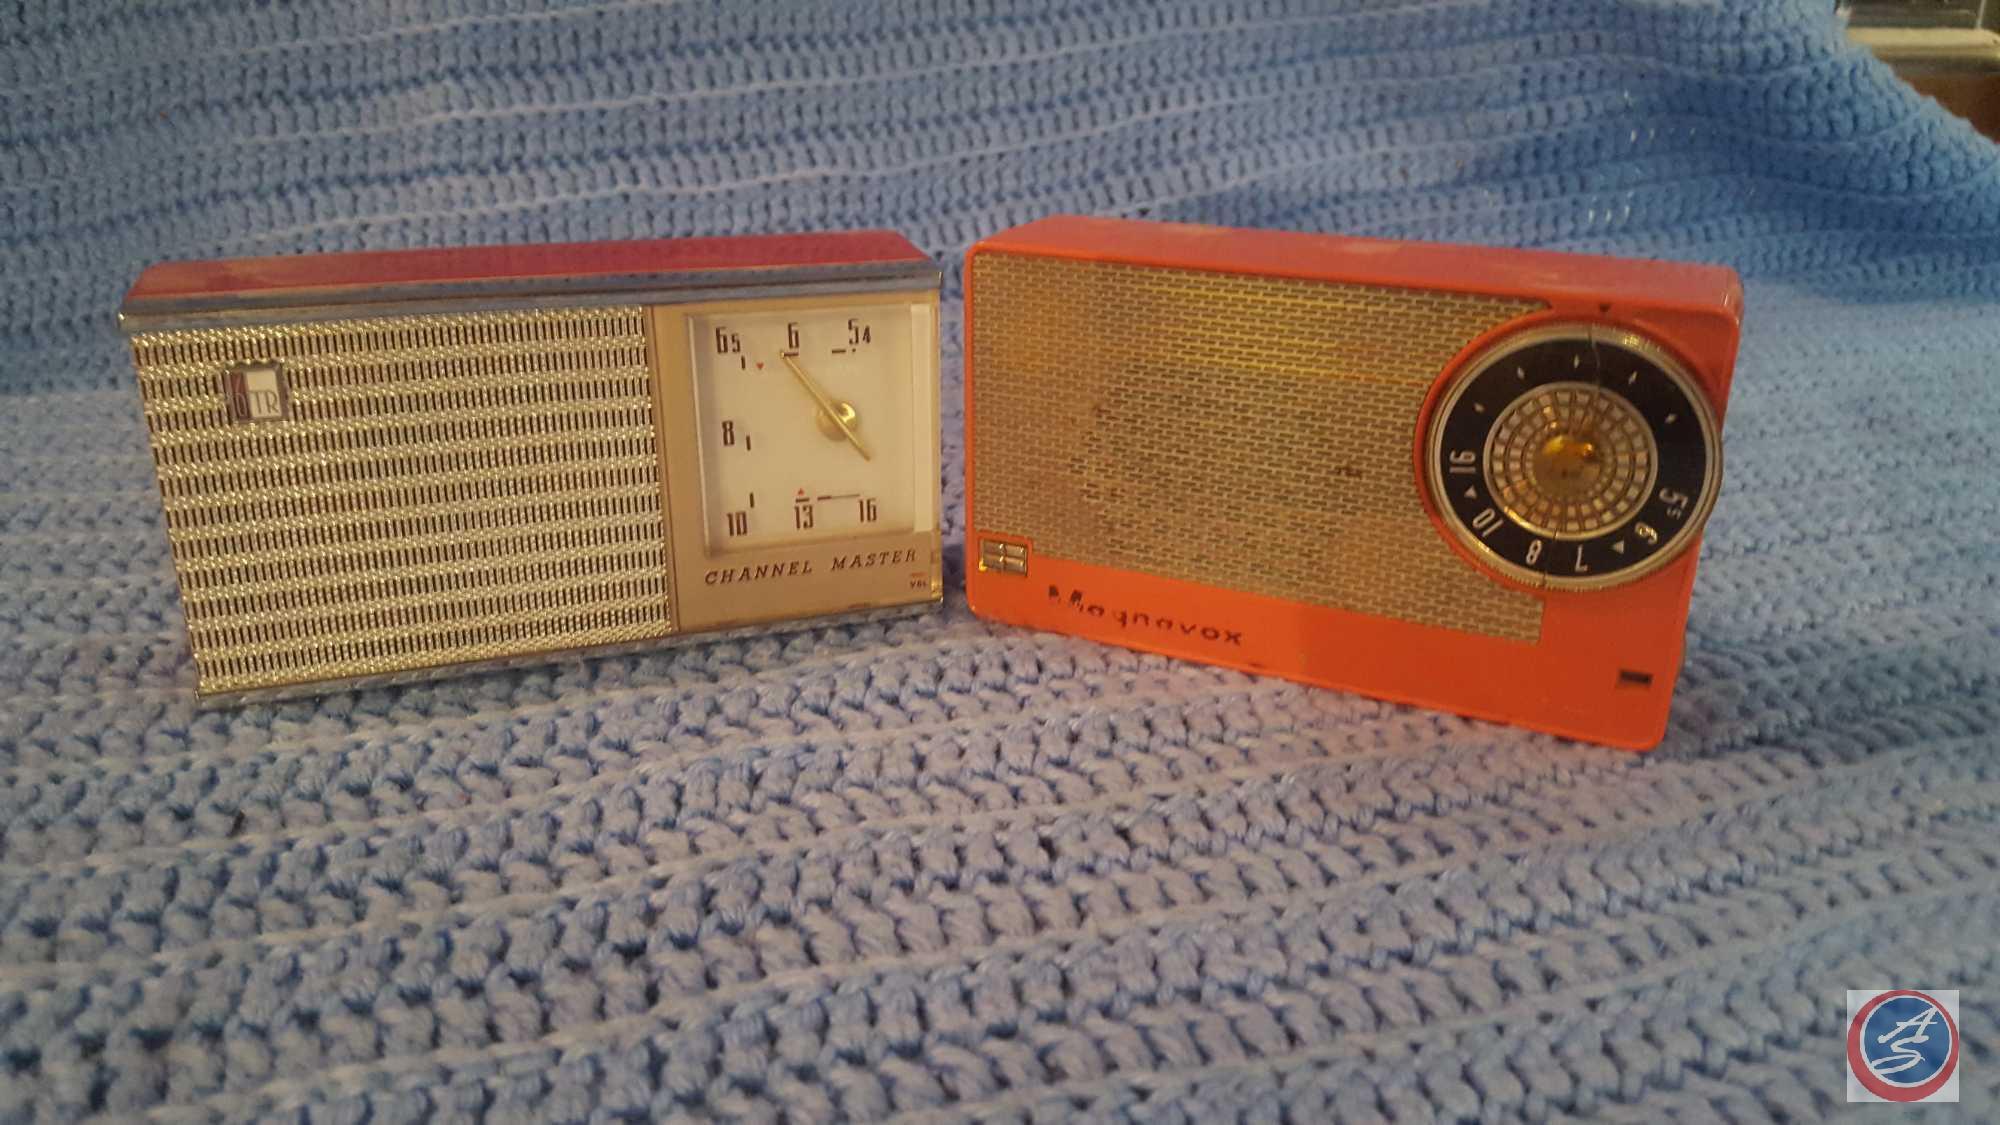 Magnavox Transistor Radio Model AM5, Channel Master Six Transistor Radio